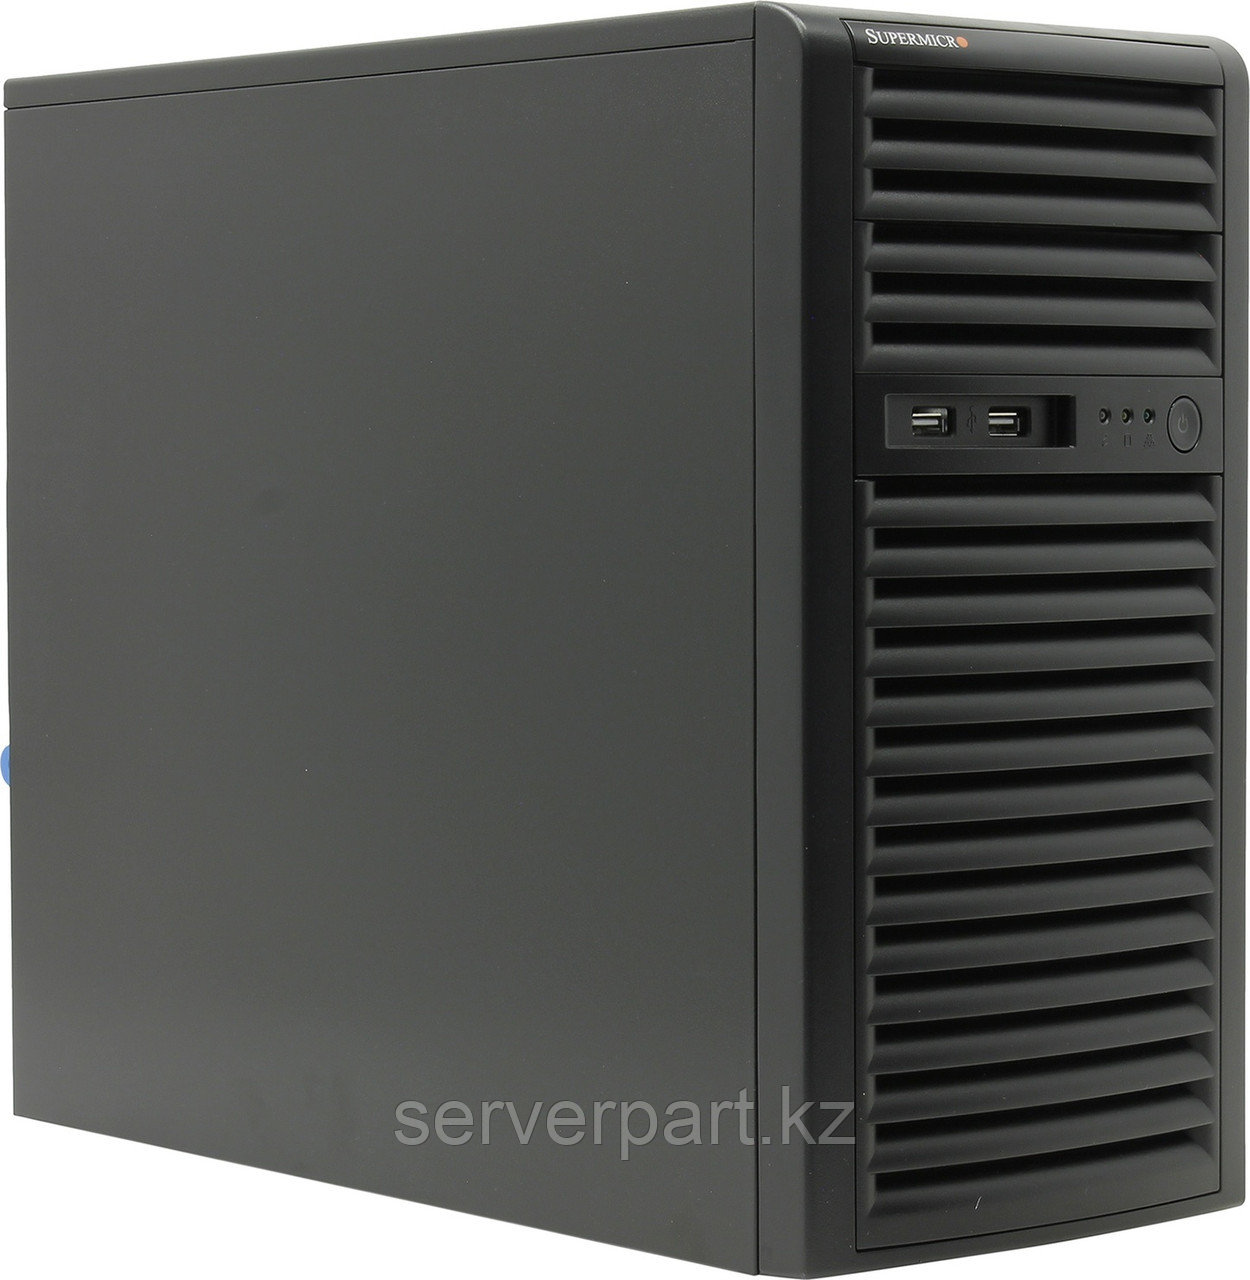 Сервер Supermicro SYS-5039D Tower/4-core intel xeon E3-1220v6 3GHz/16GB UDIMM nECC/1x480GB SSD DT Hyb